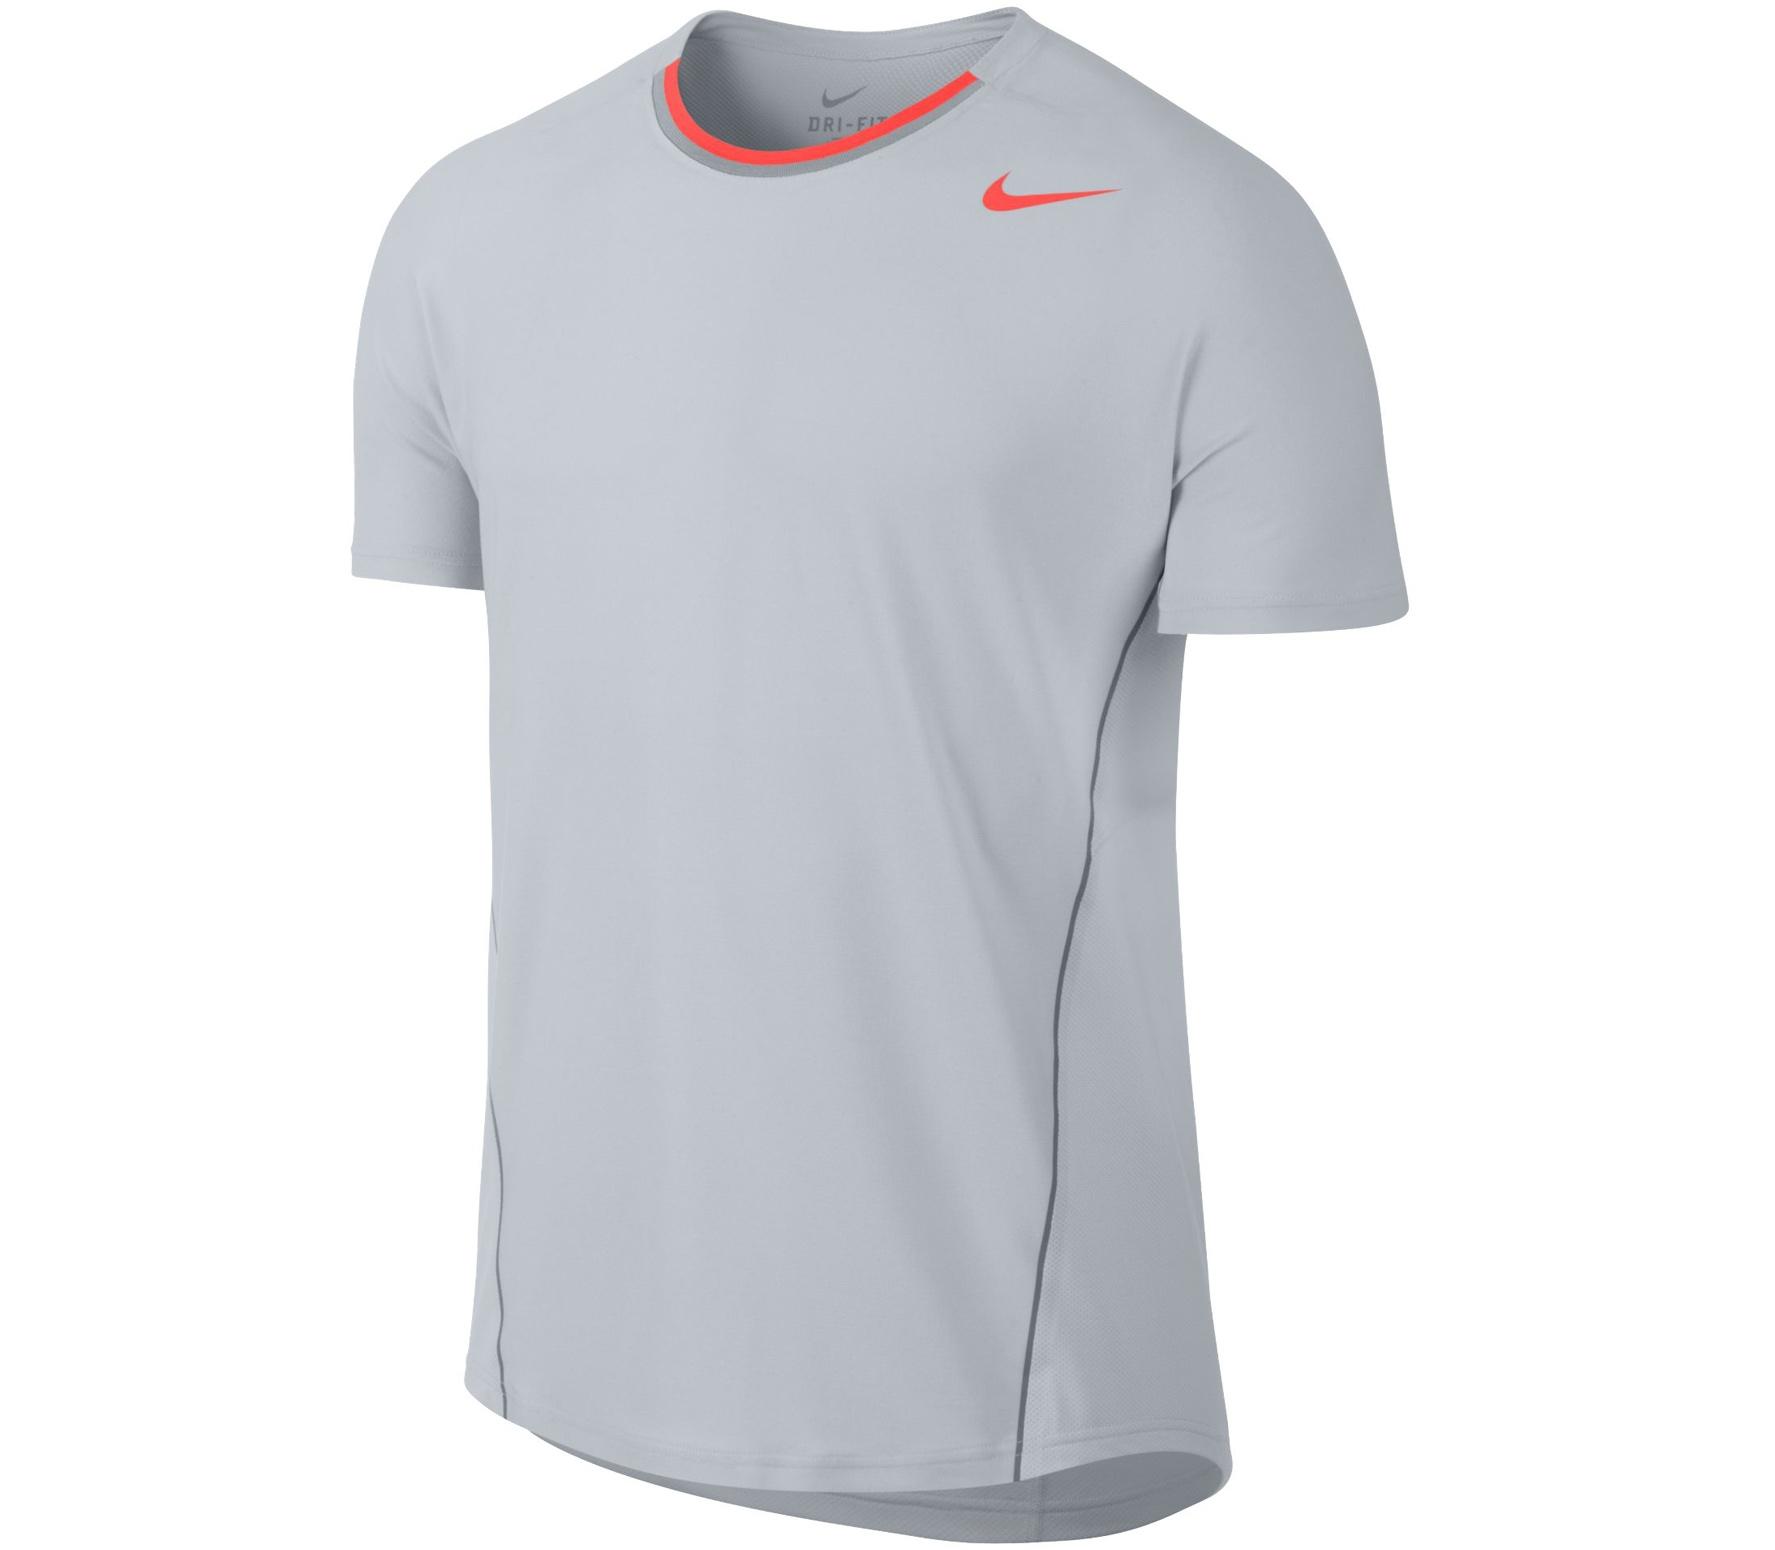 Foto Nike - Camiseta Tenis Hombre Premier Rafael Nadal Crew - SU13